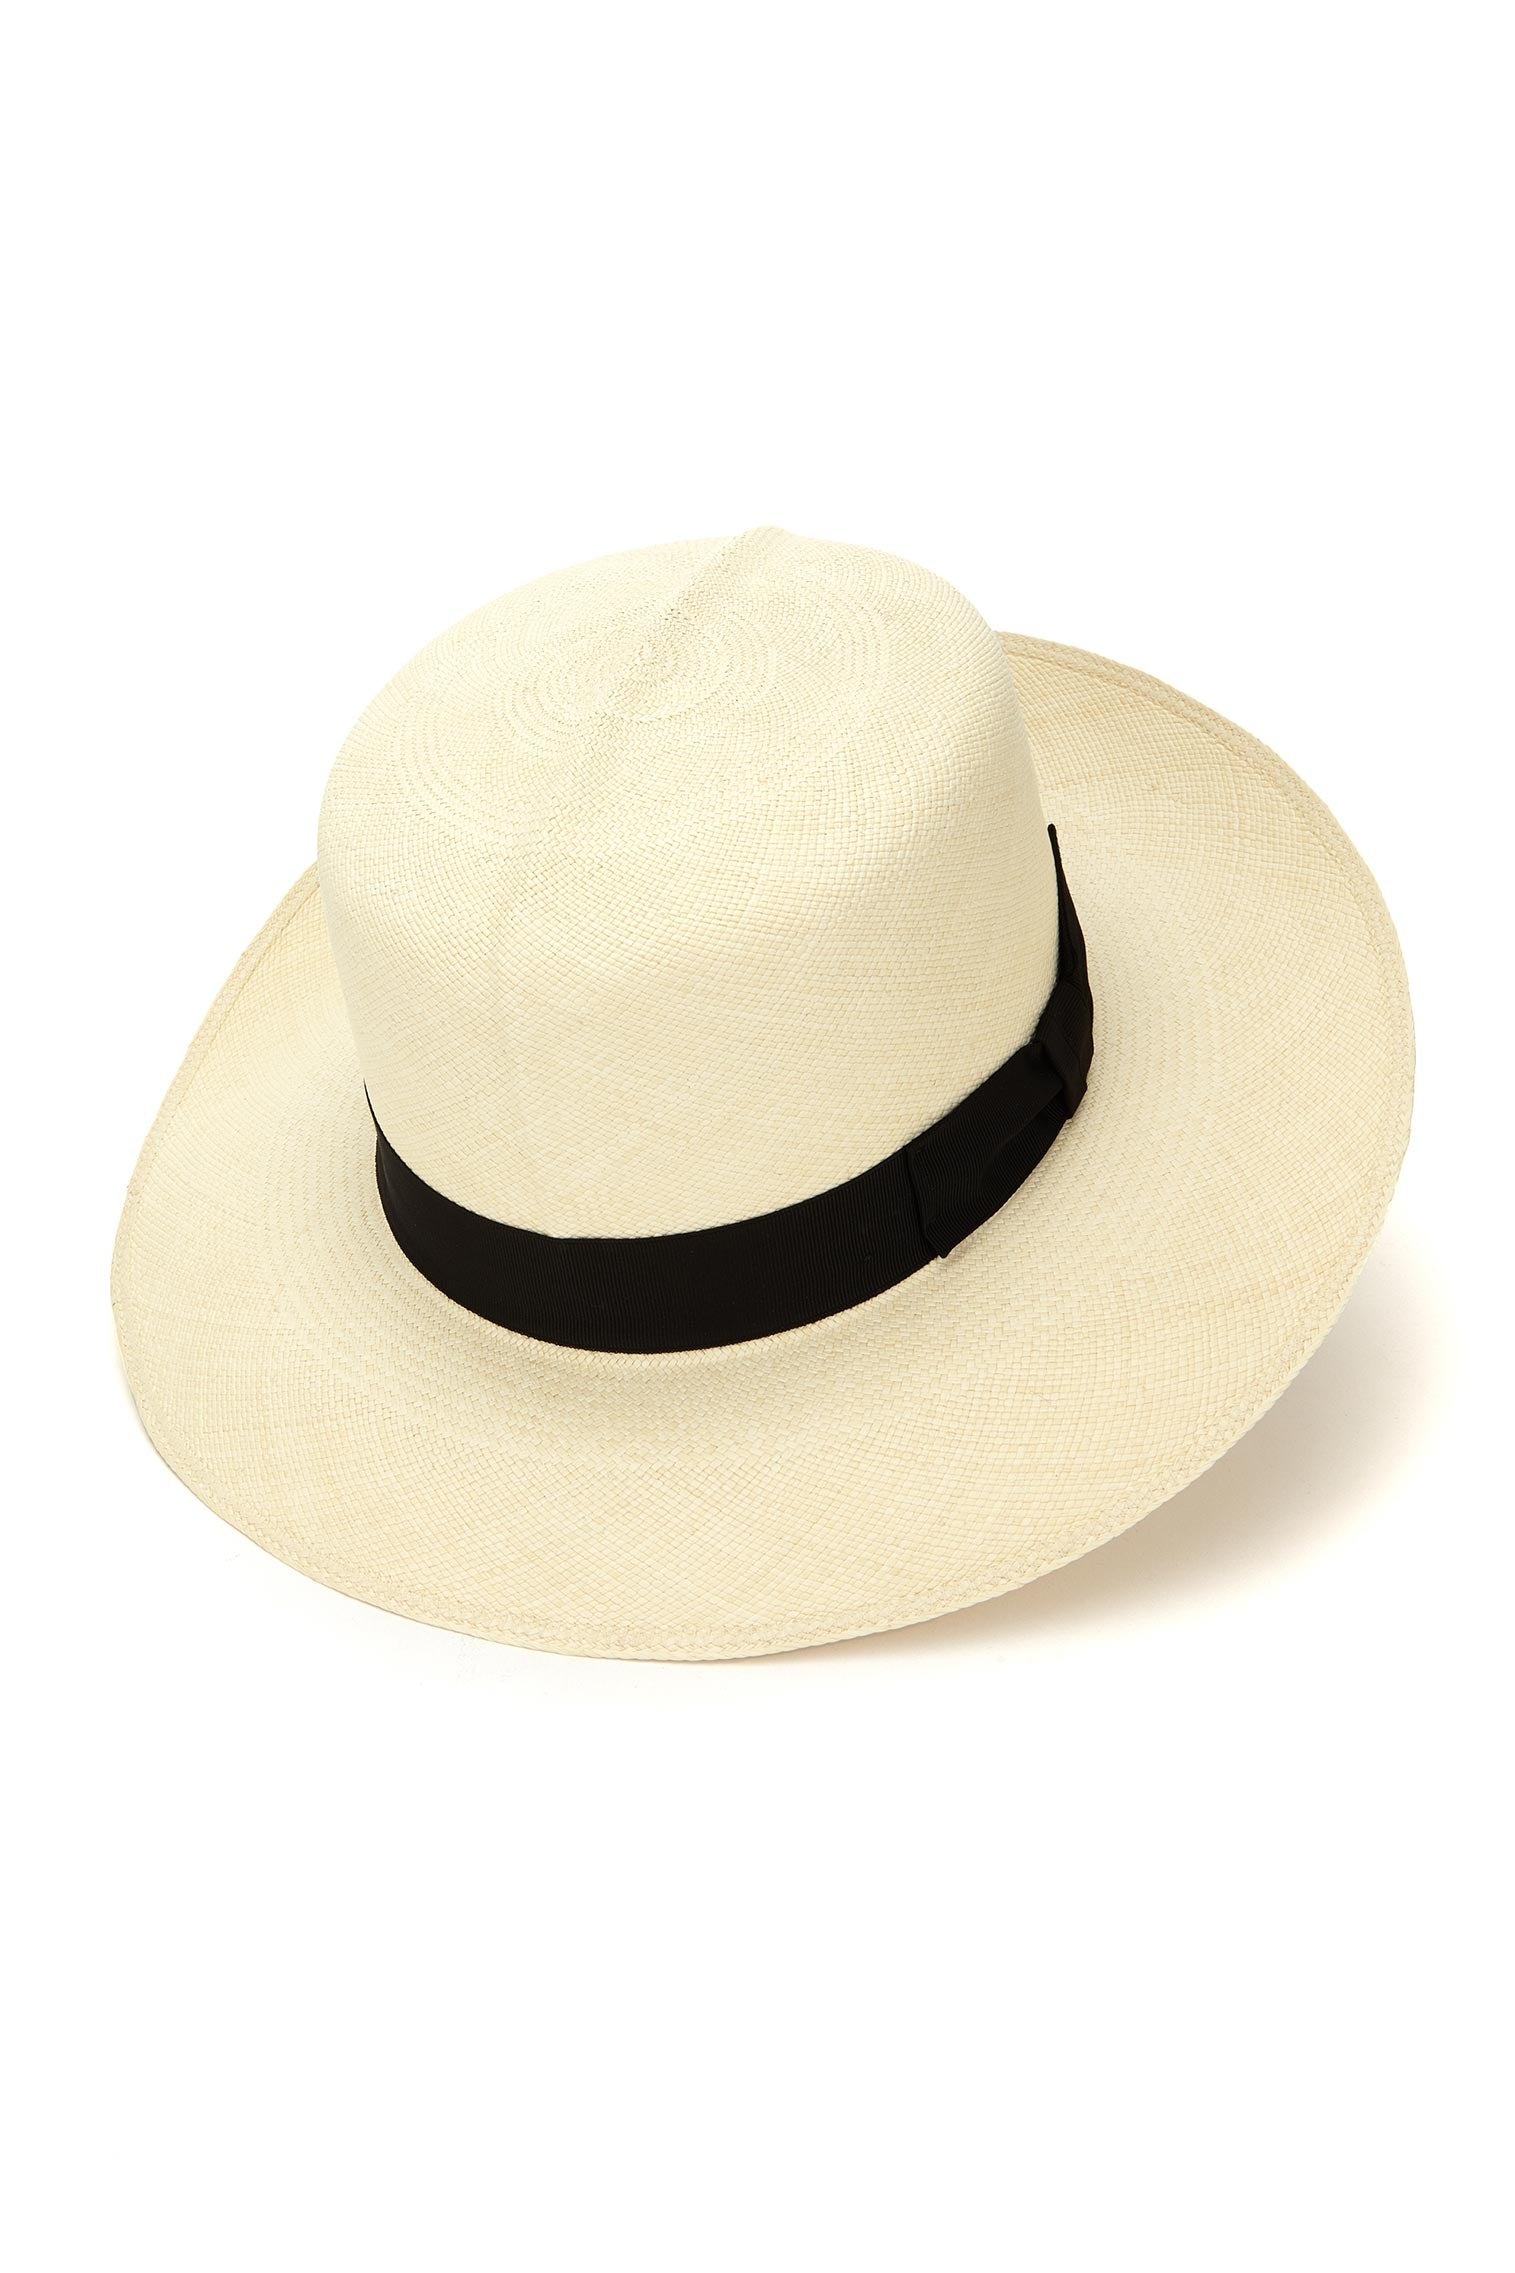 Rollable Superfino Montecristi Panama - Panamas, Straw and Sun Hats for Men - Lock & Co. Hatters London UK